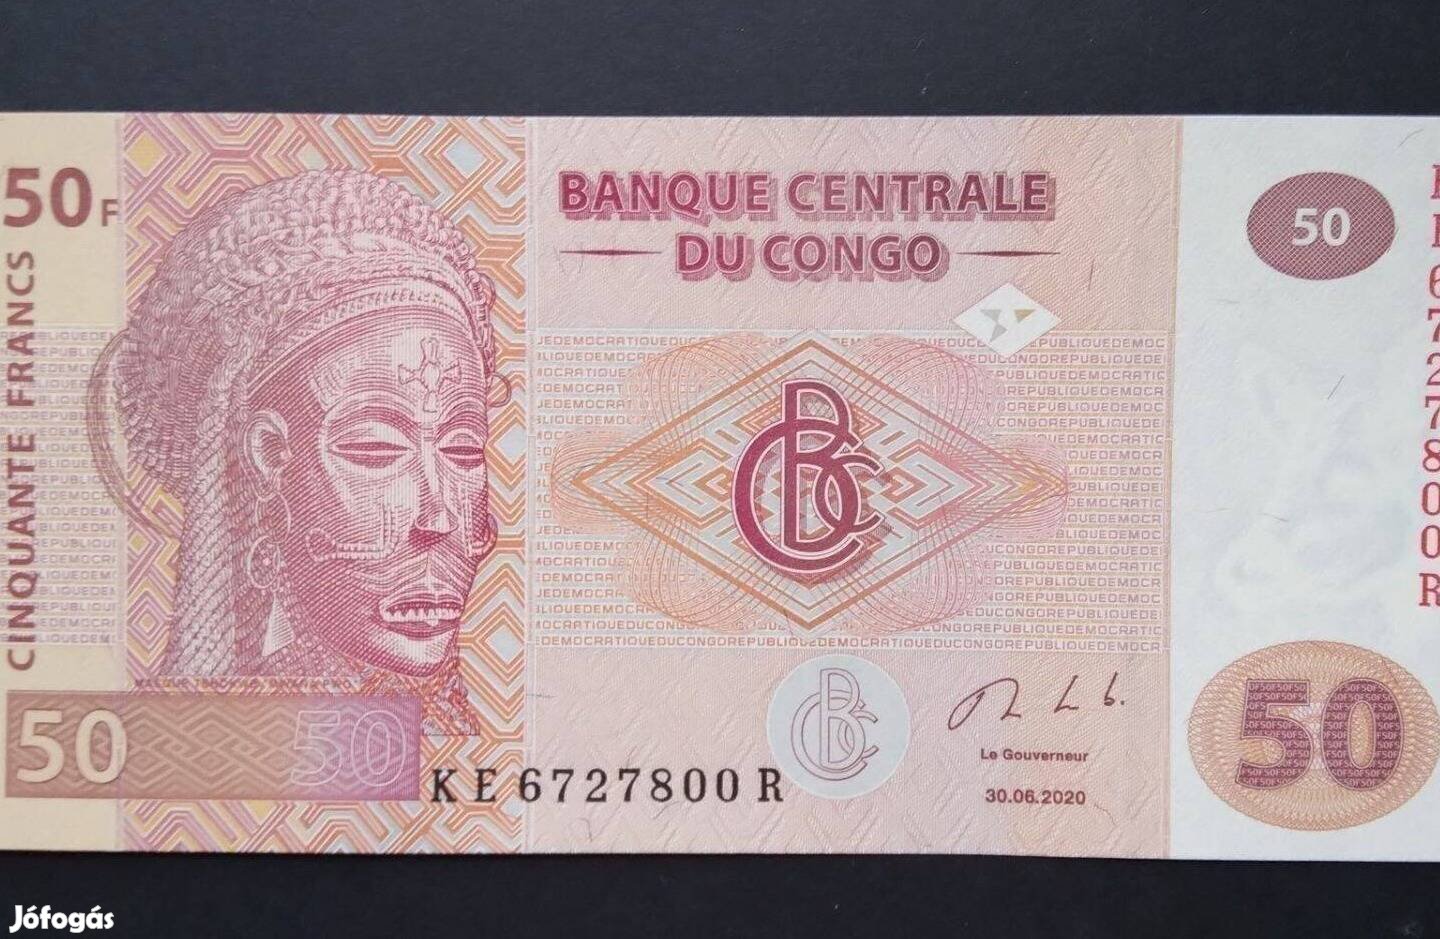 2020 / 50 Francs UNC Kongó (M1)